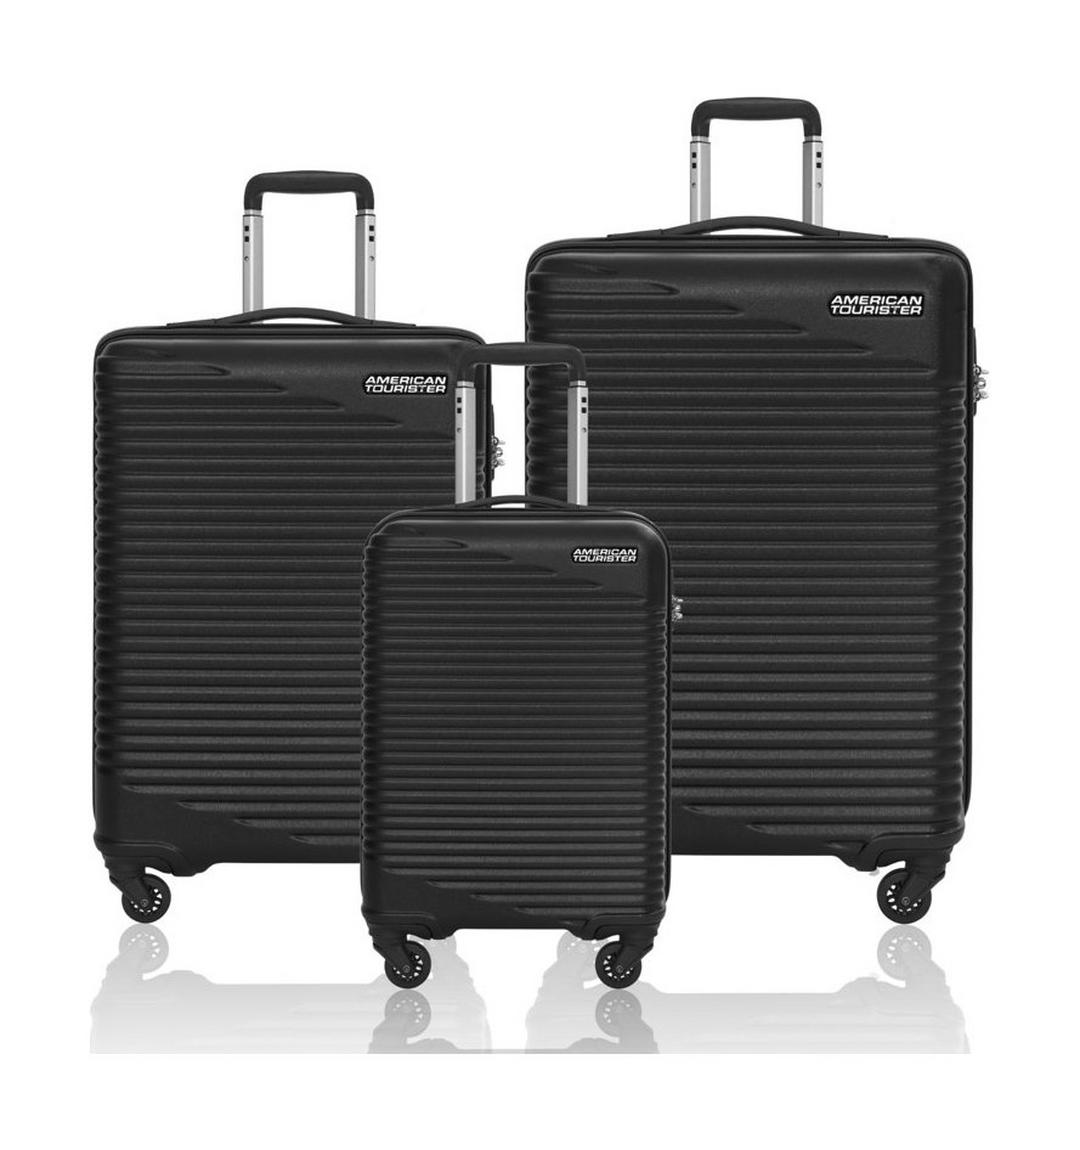 American Tourister Skypark Hardcase Luggage (Set Of 3) - Black